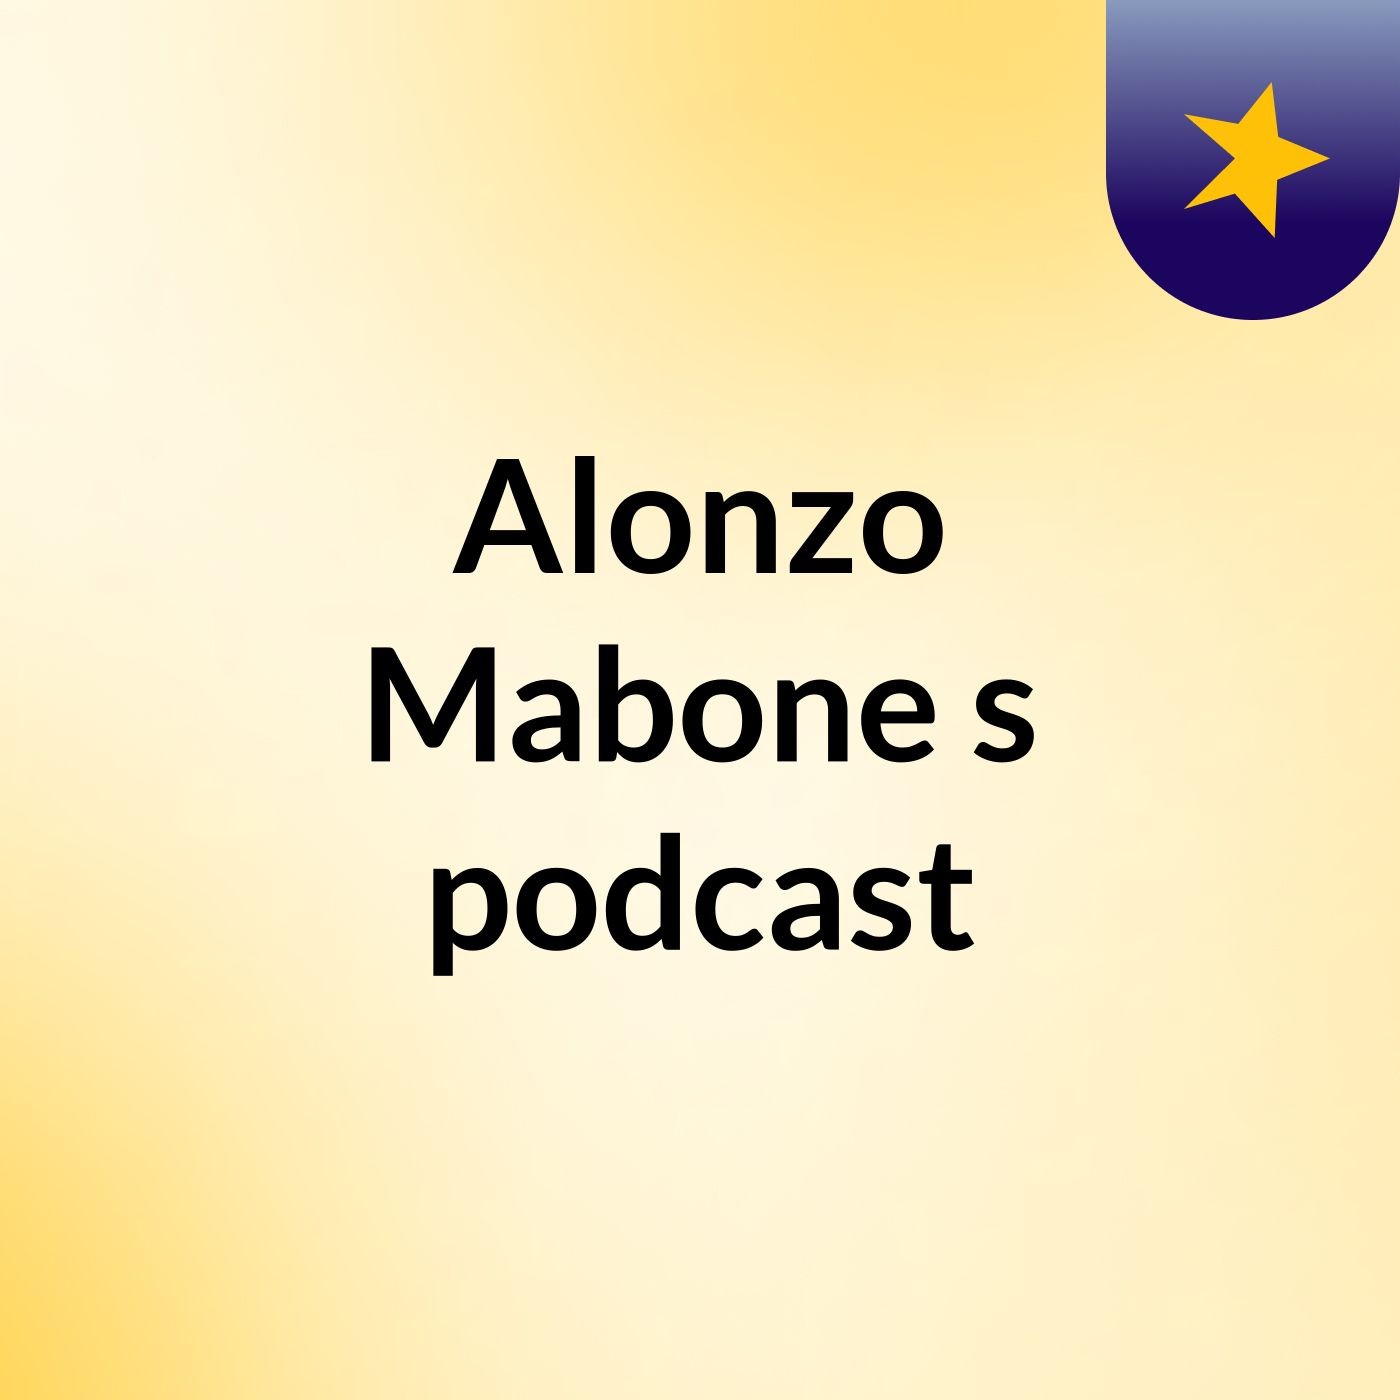 Alonzo Mabone's podcast